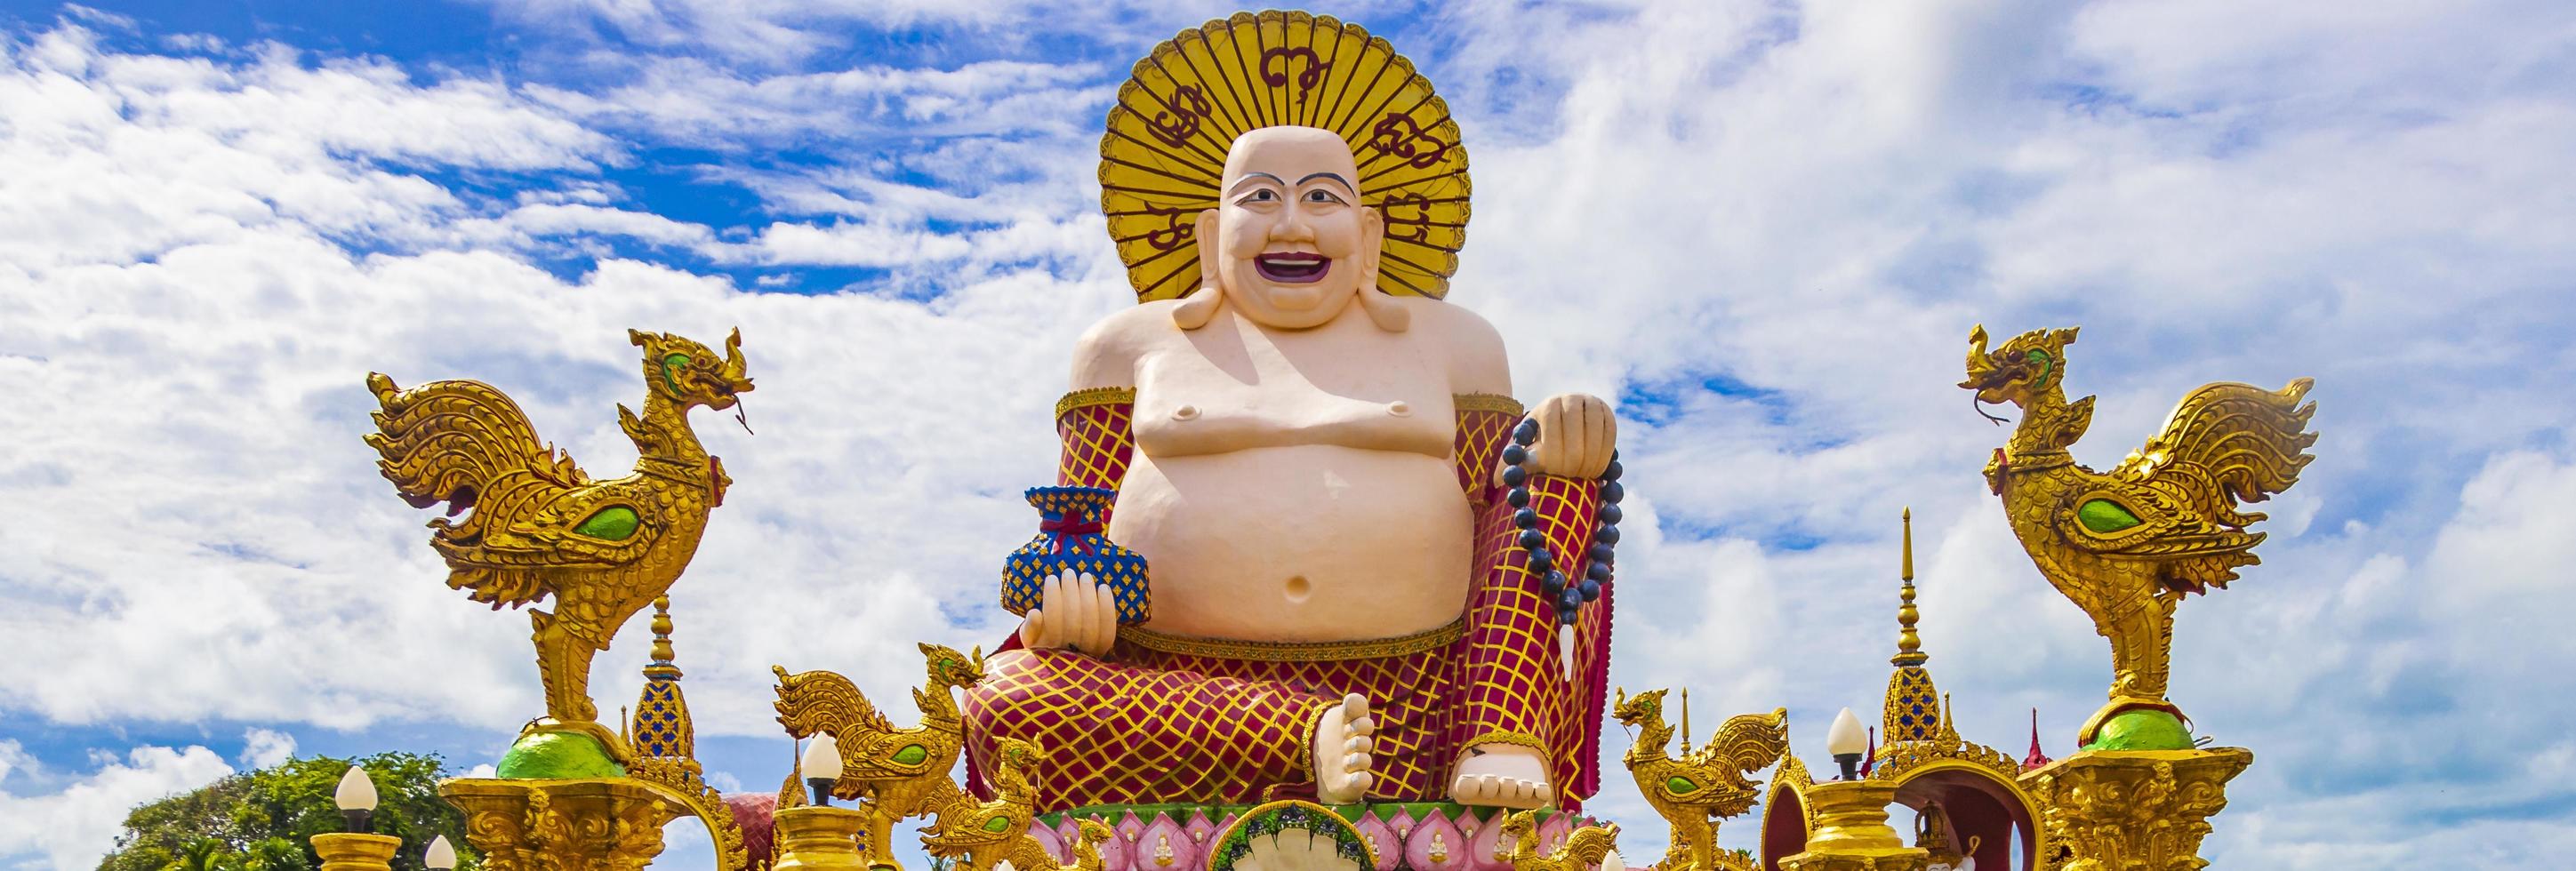 Bunte fette Buddha-Statue im Wat Plai Laem Tempel auf der Insel Koh Samui, Thailand, 2018 foto